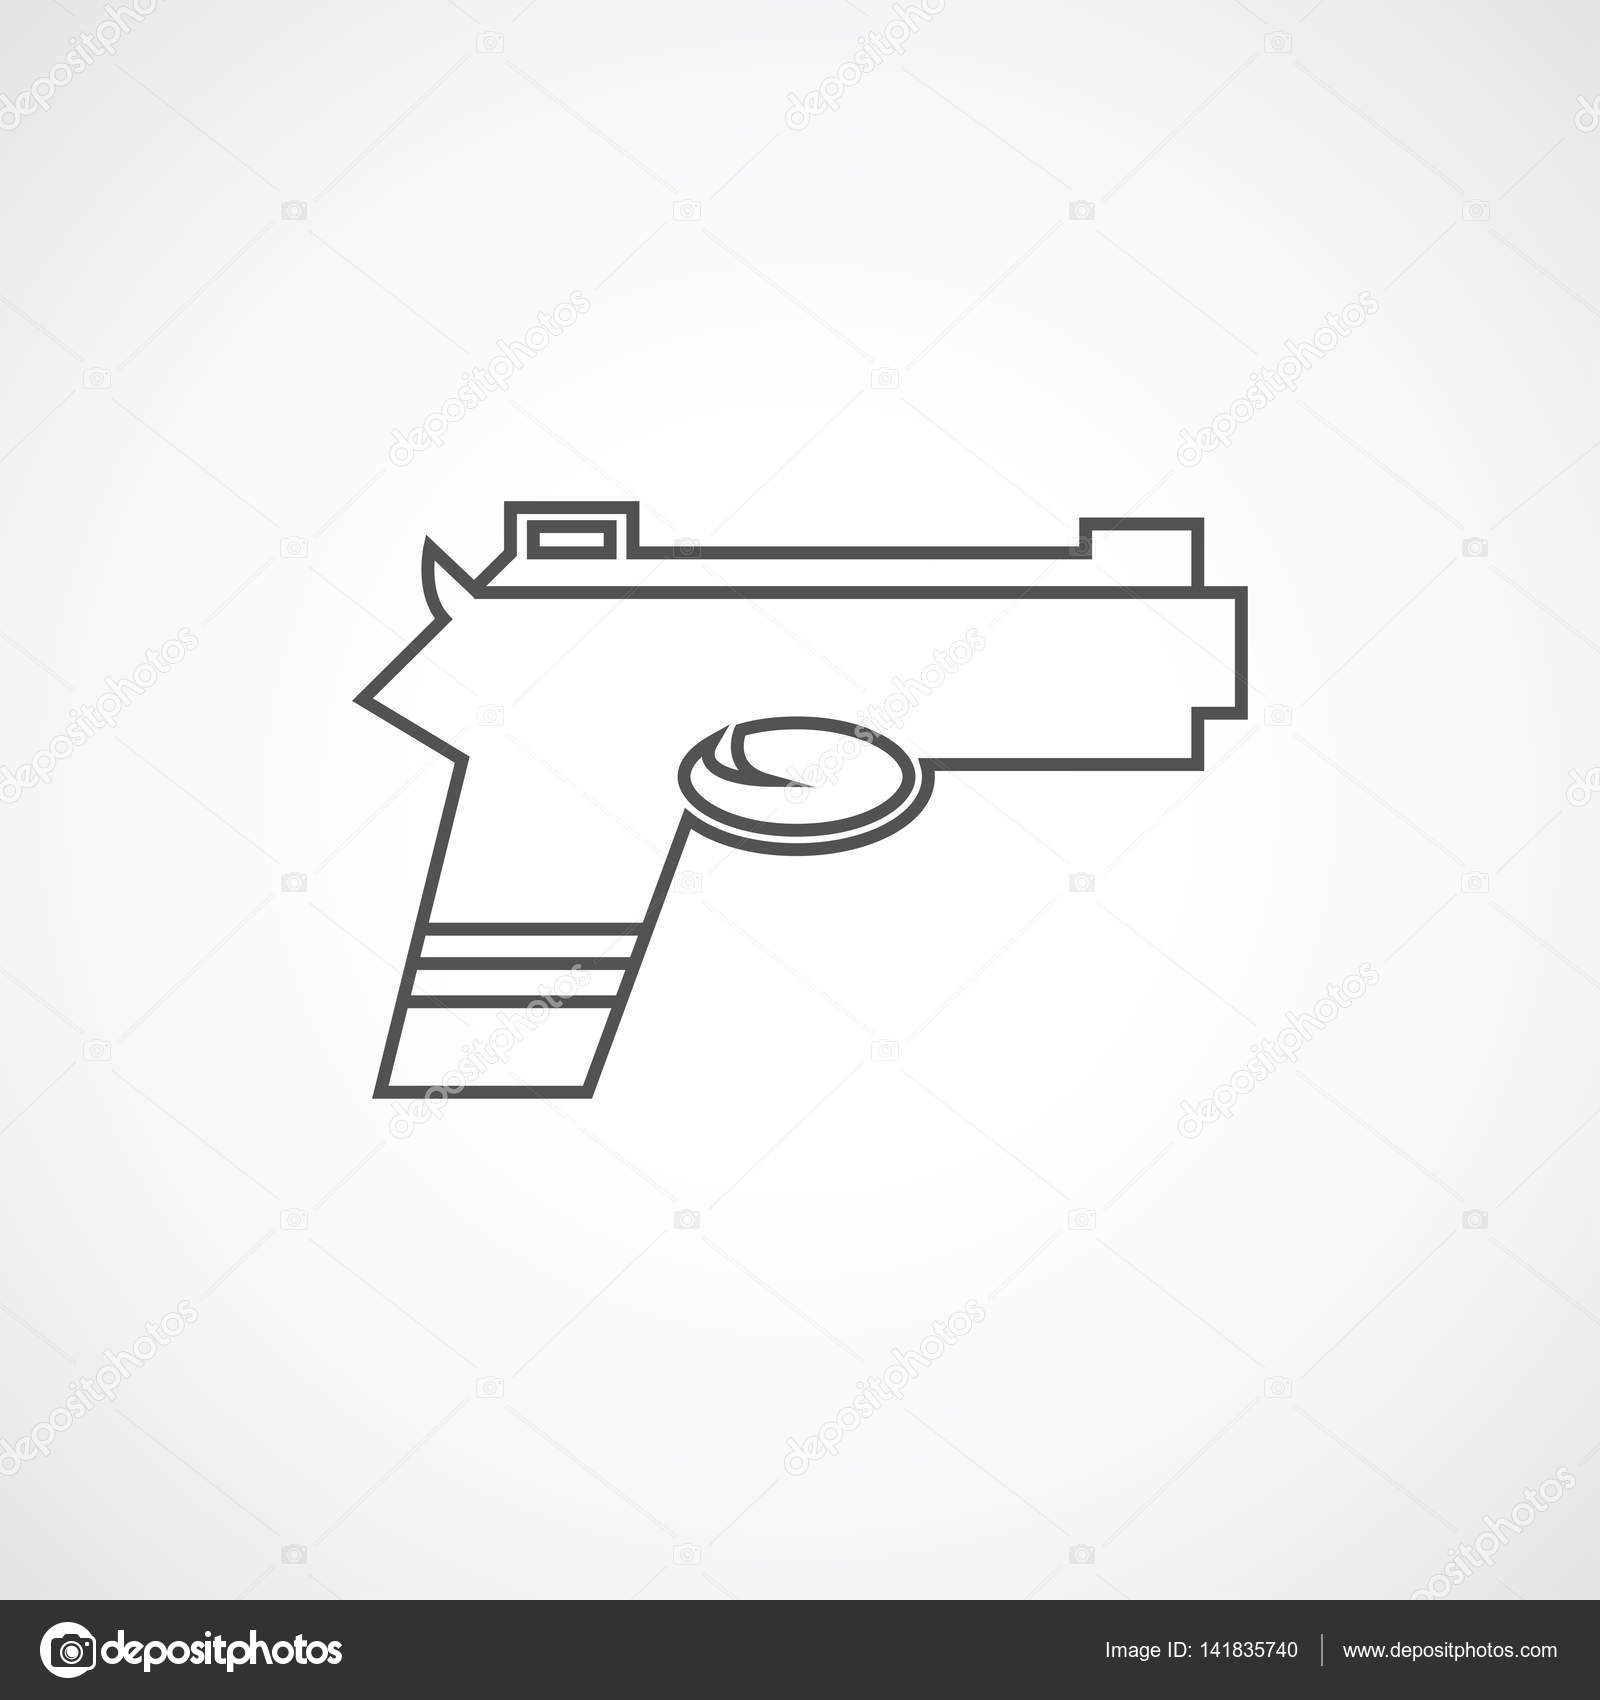 Design vetorial de logotipo de jogo de armas